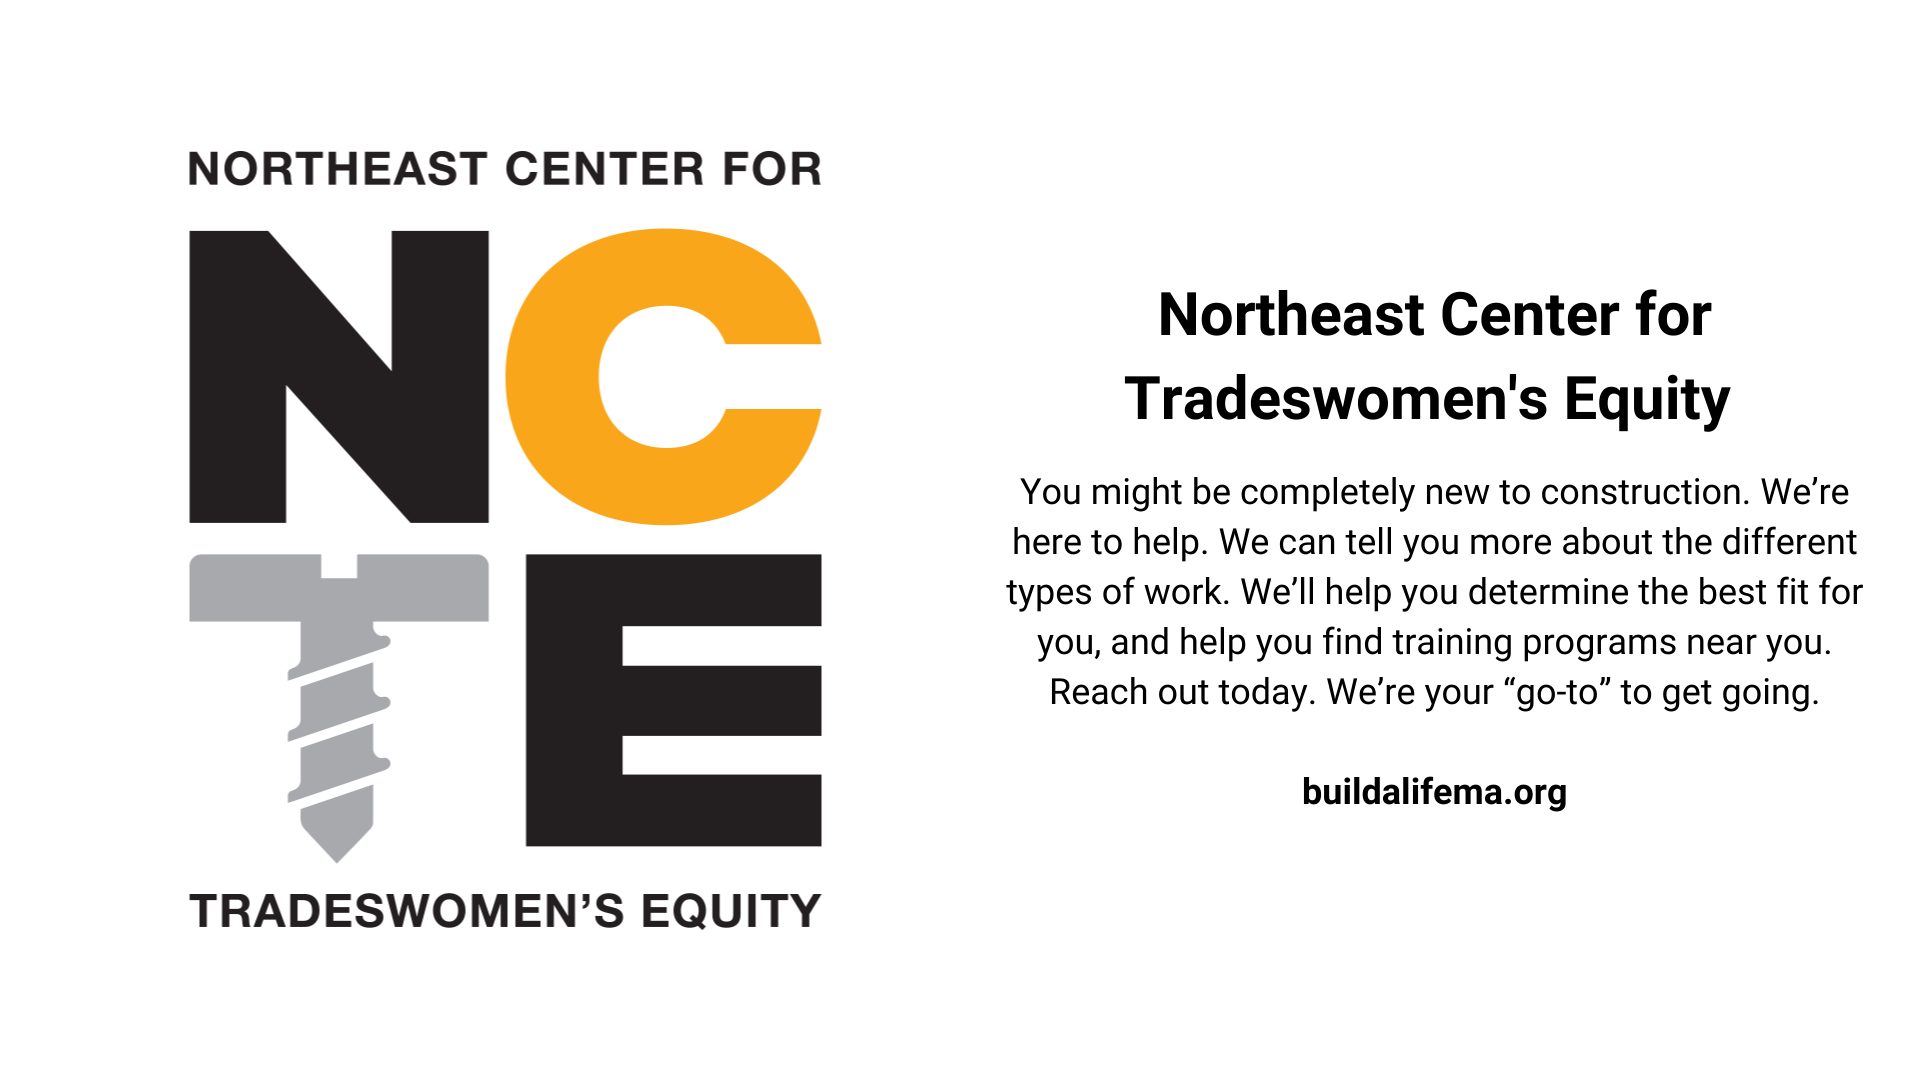 Northeast Center for Tradeswomen's Equity